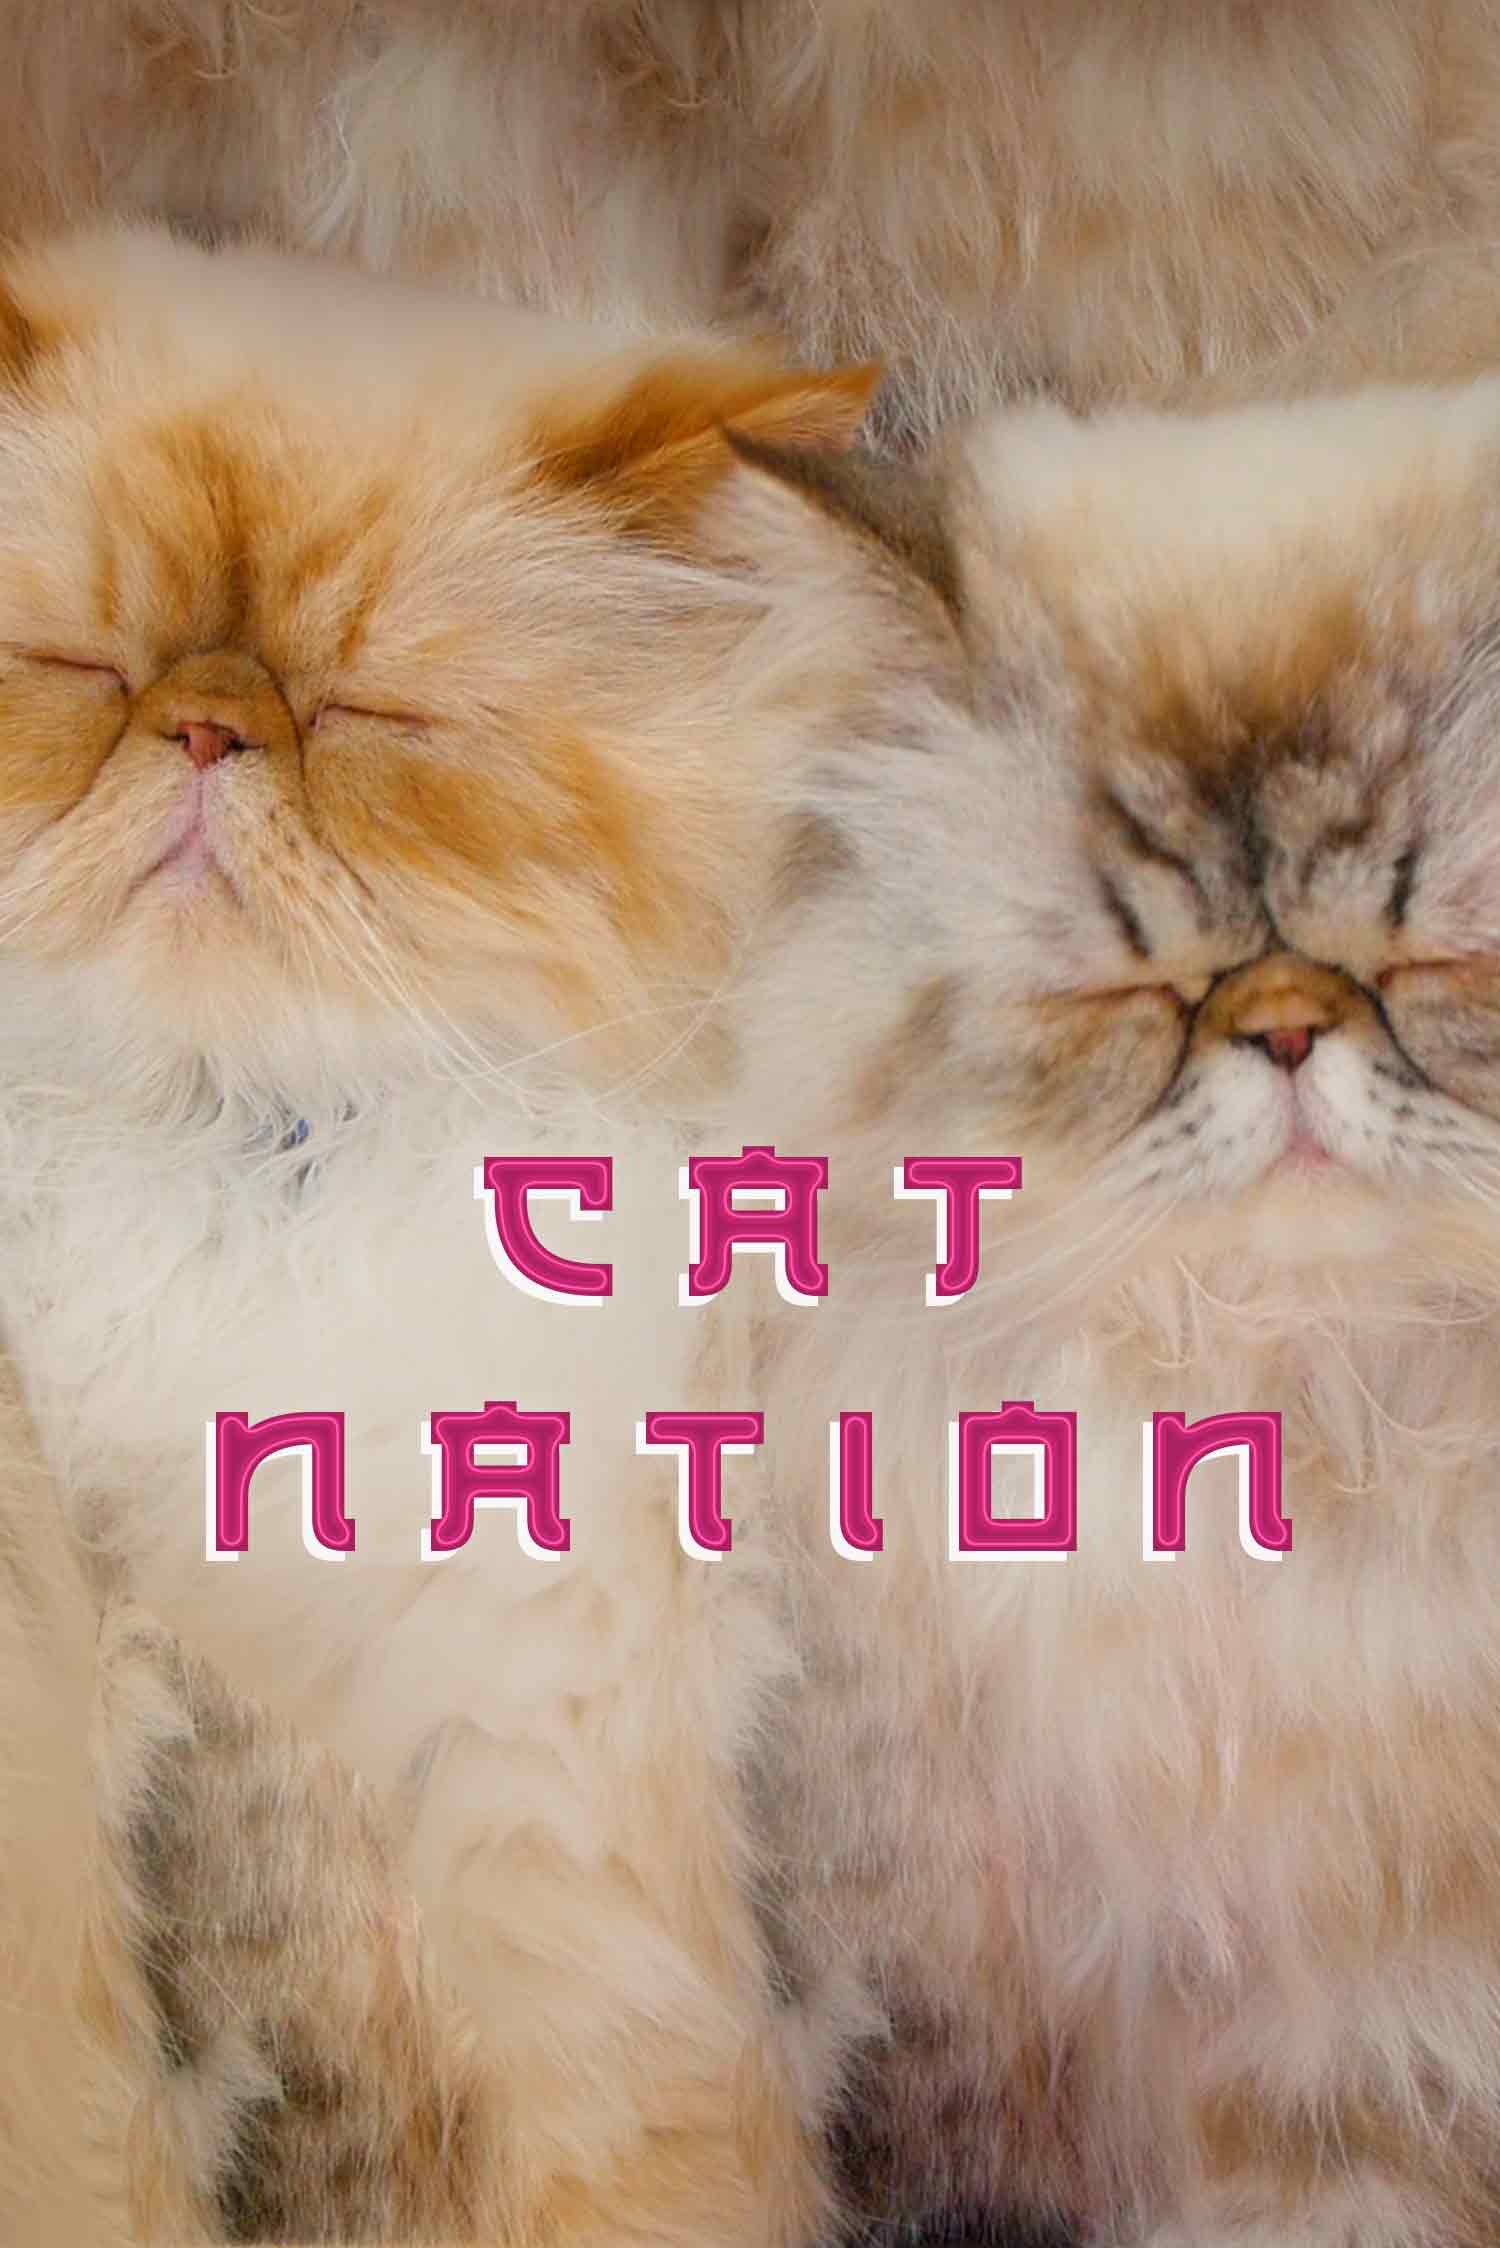 Cat Nation